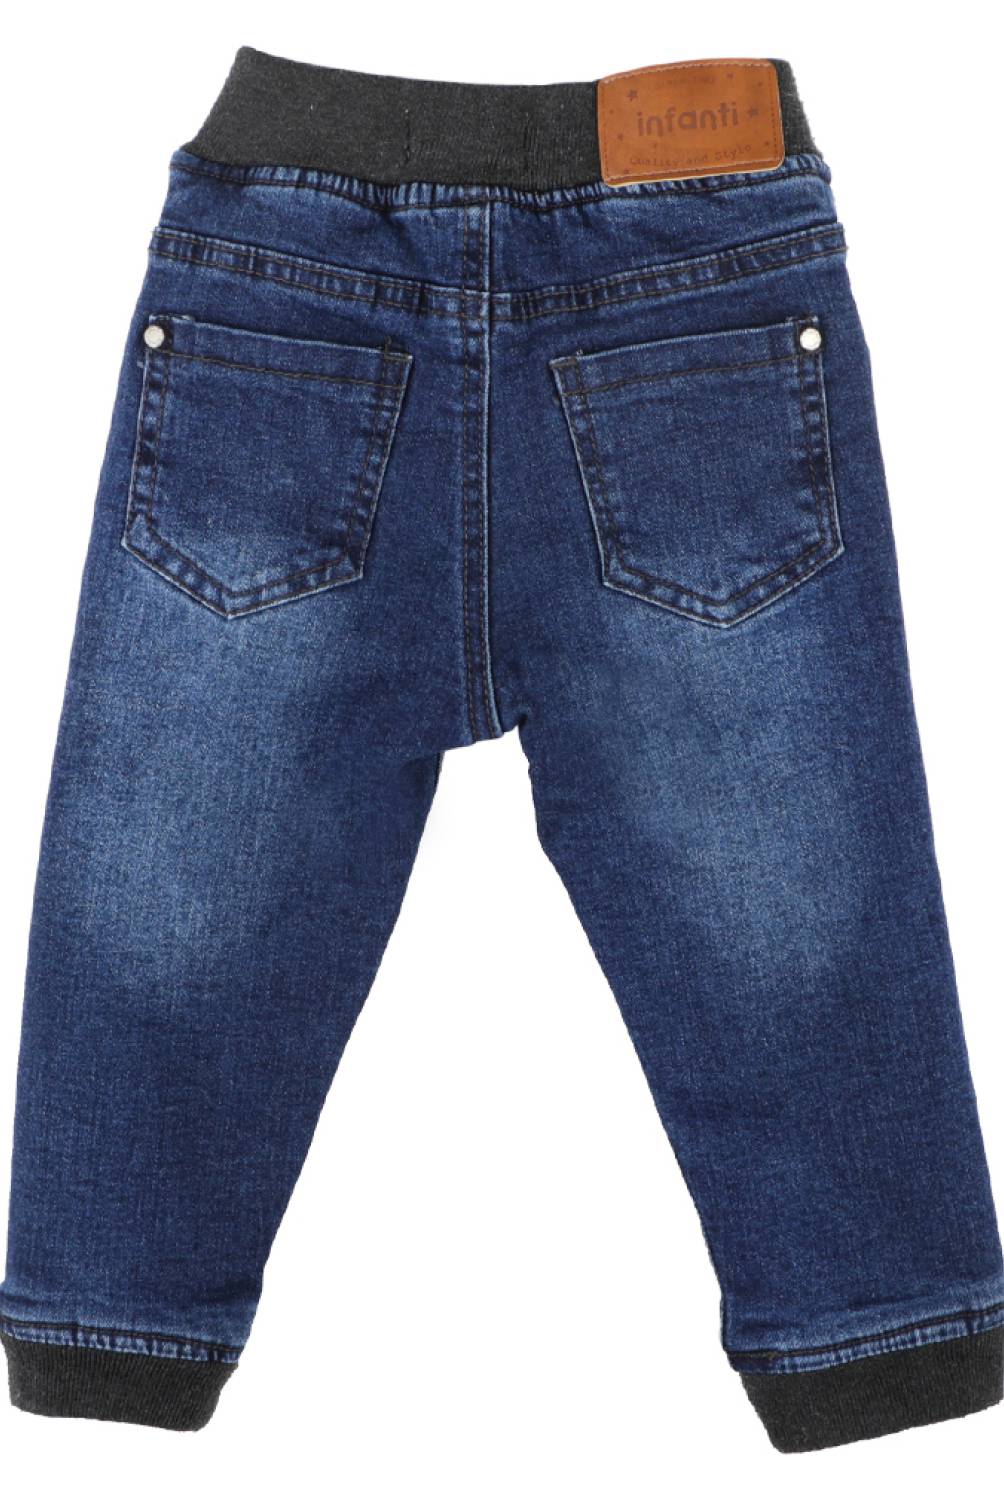 INFANTI - Jeans Con Forro Polar Unisex